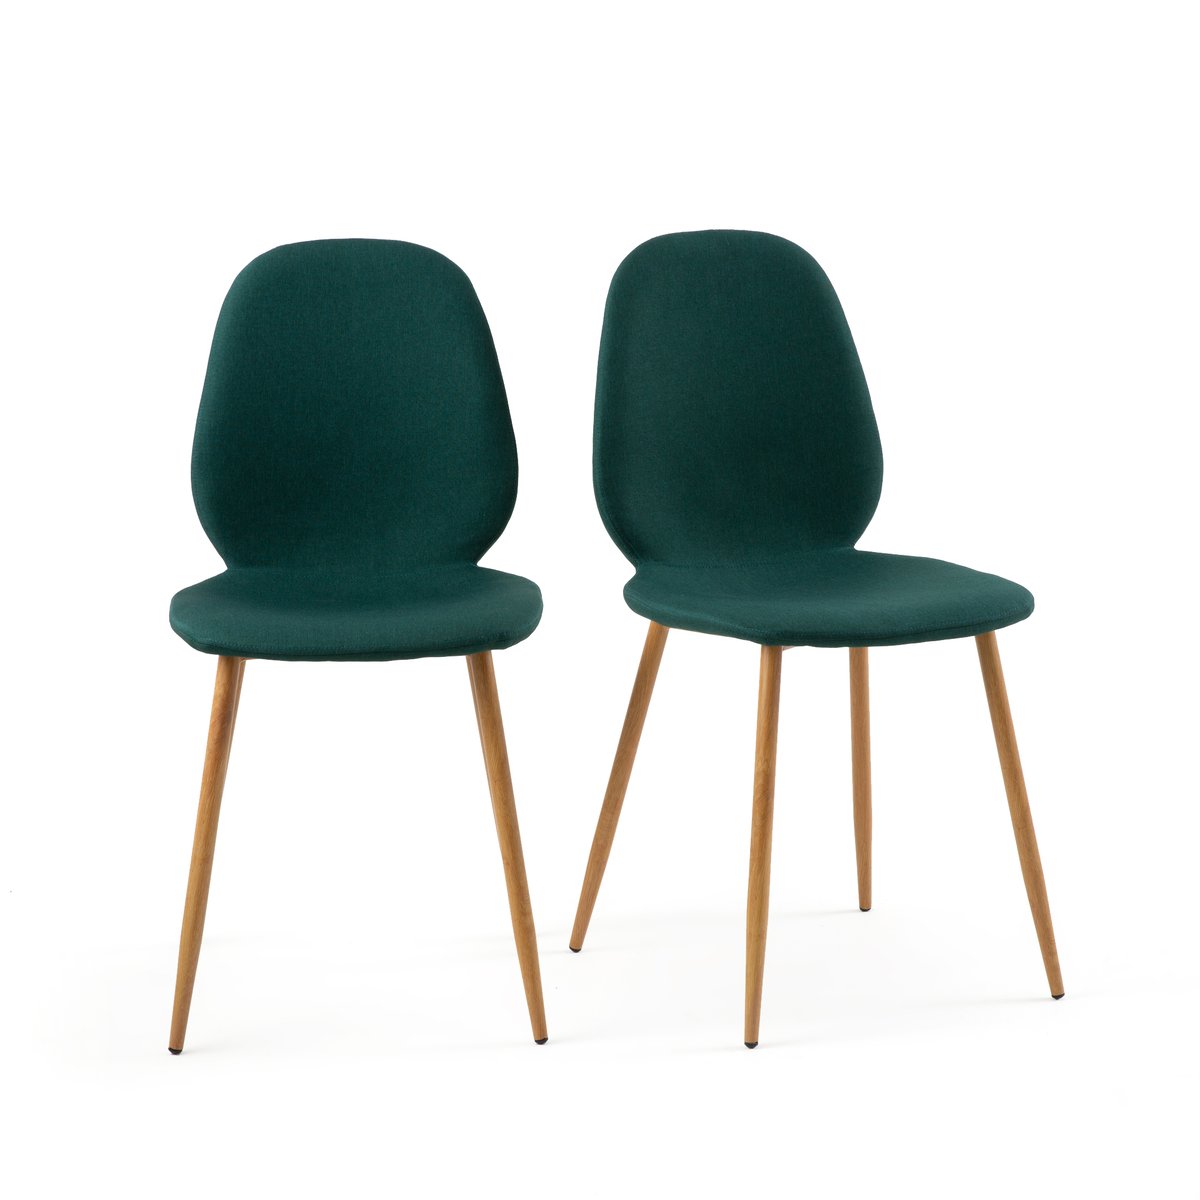 Комплект из 2 стульев Nordie LaRedoute